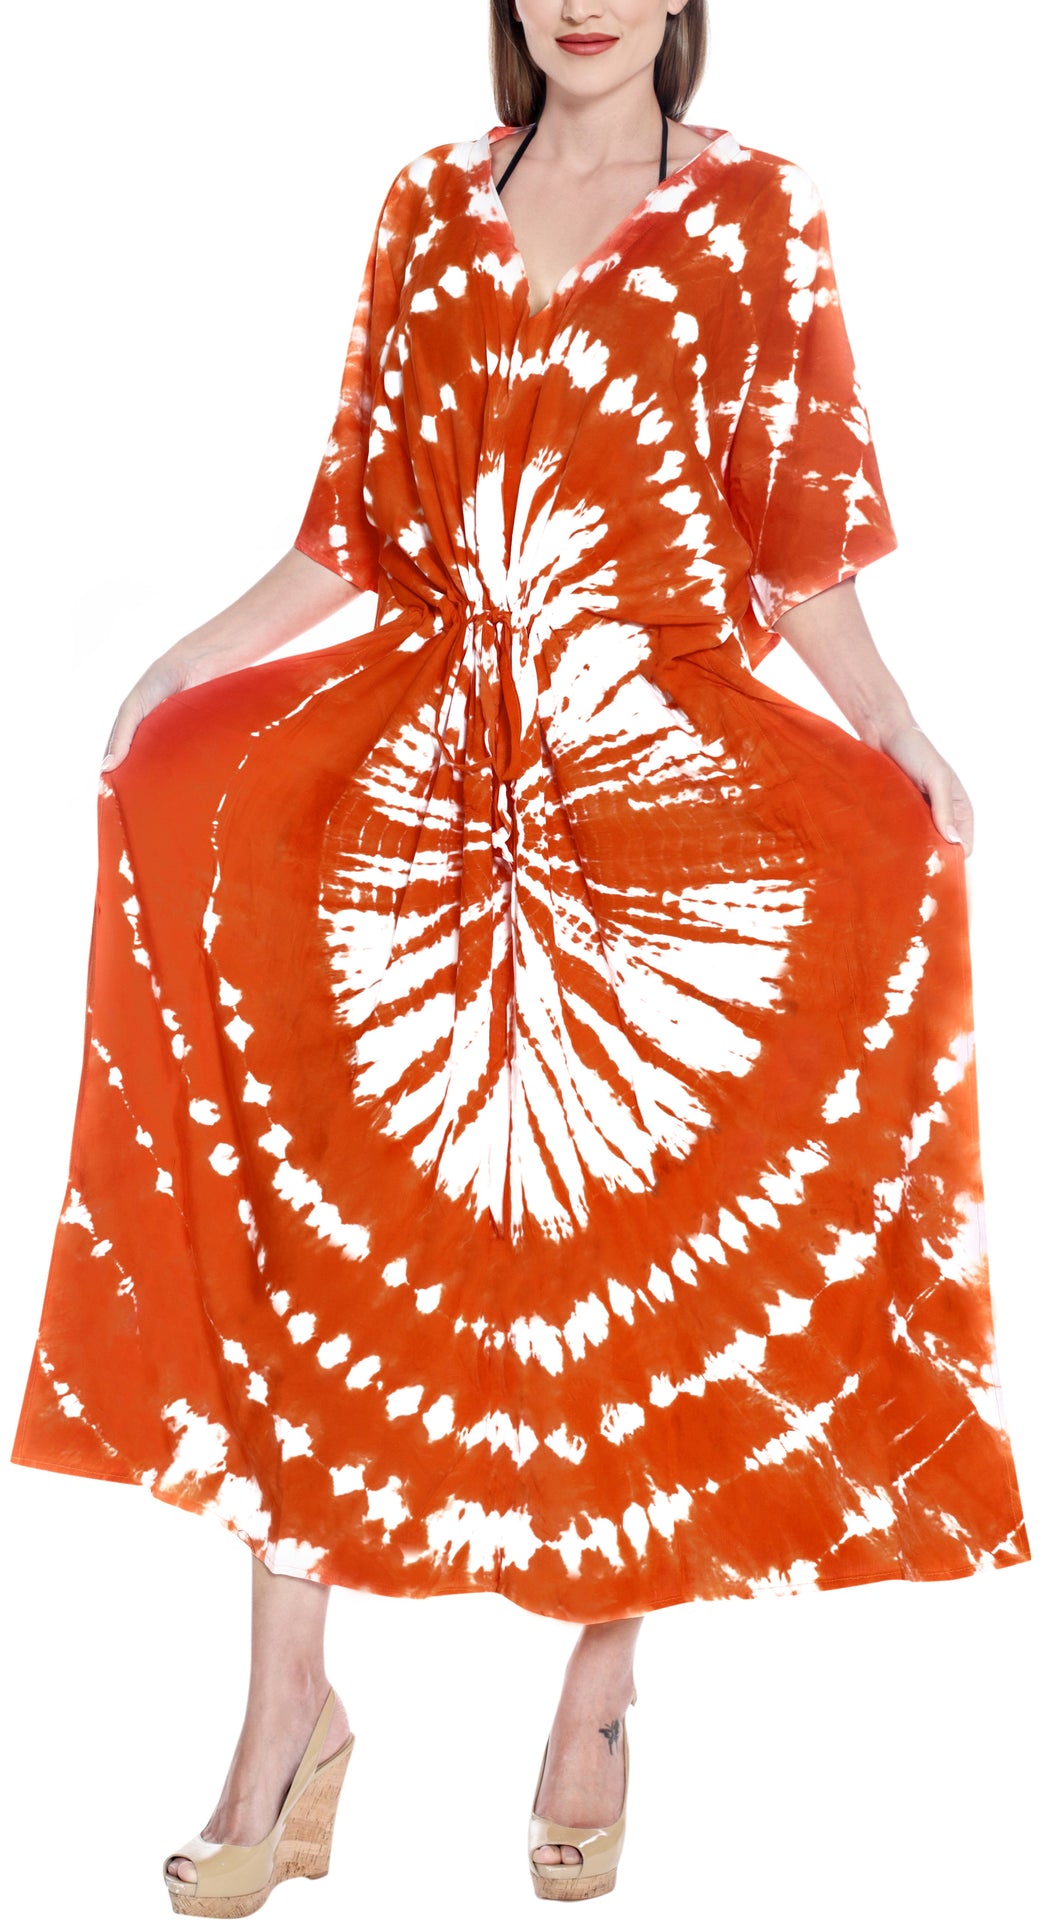 la-leela-rayon-tie_dye-caftan-beach-dress-women-orange_1403-osfm-14-32w